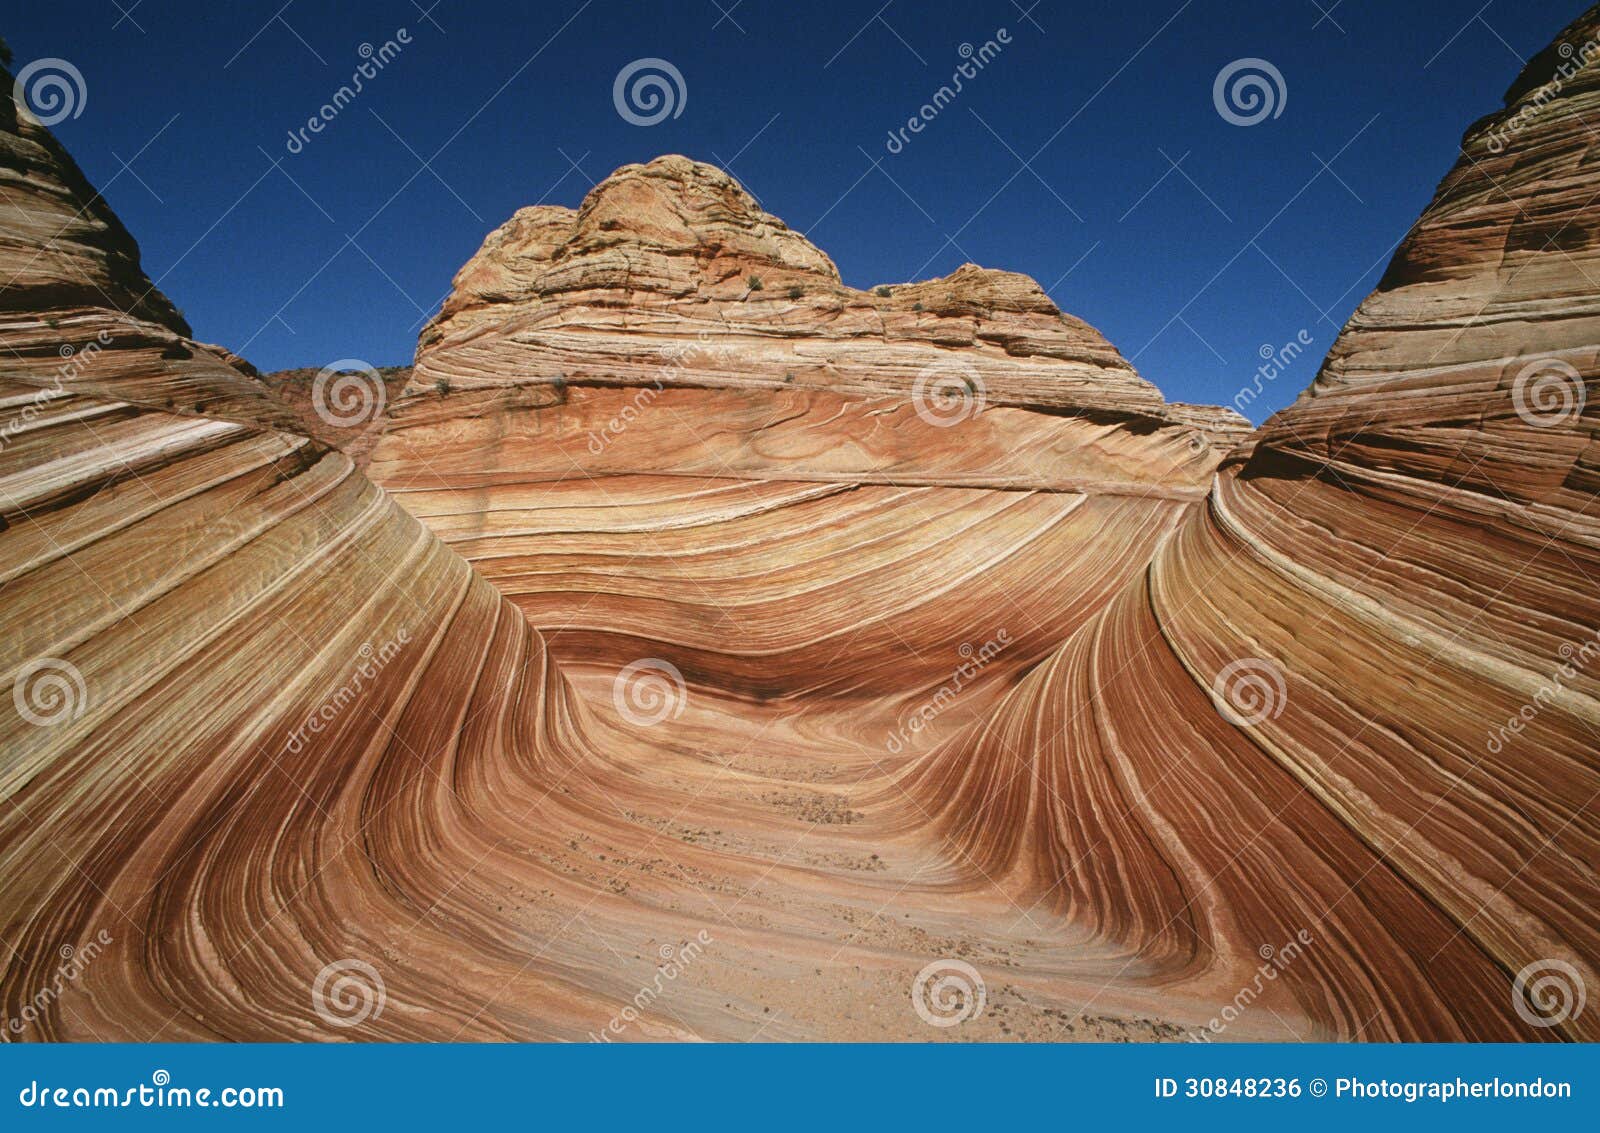 usa arizona paria canyon-vermilion cliffs wilderness the wave sandstone rock formation